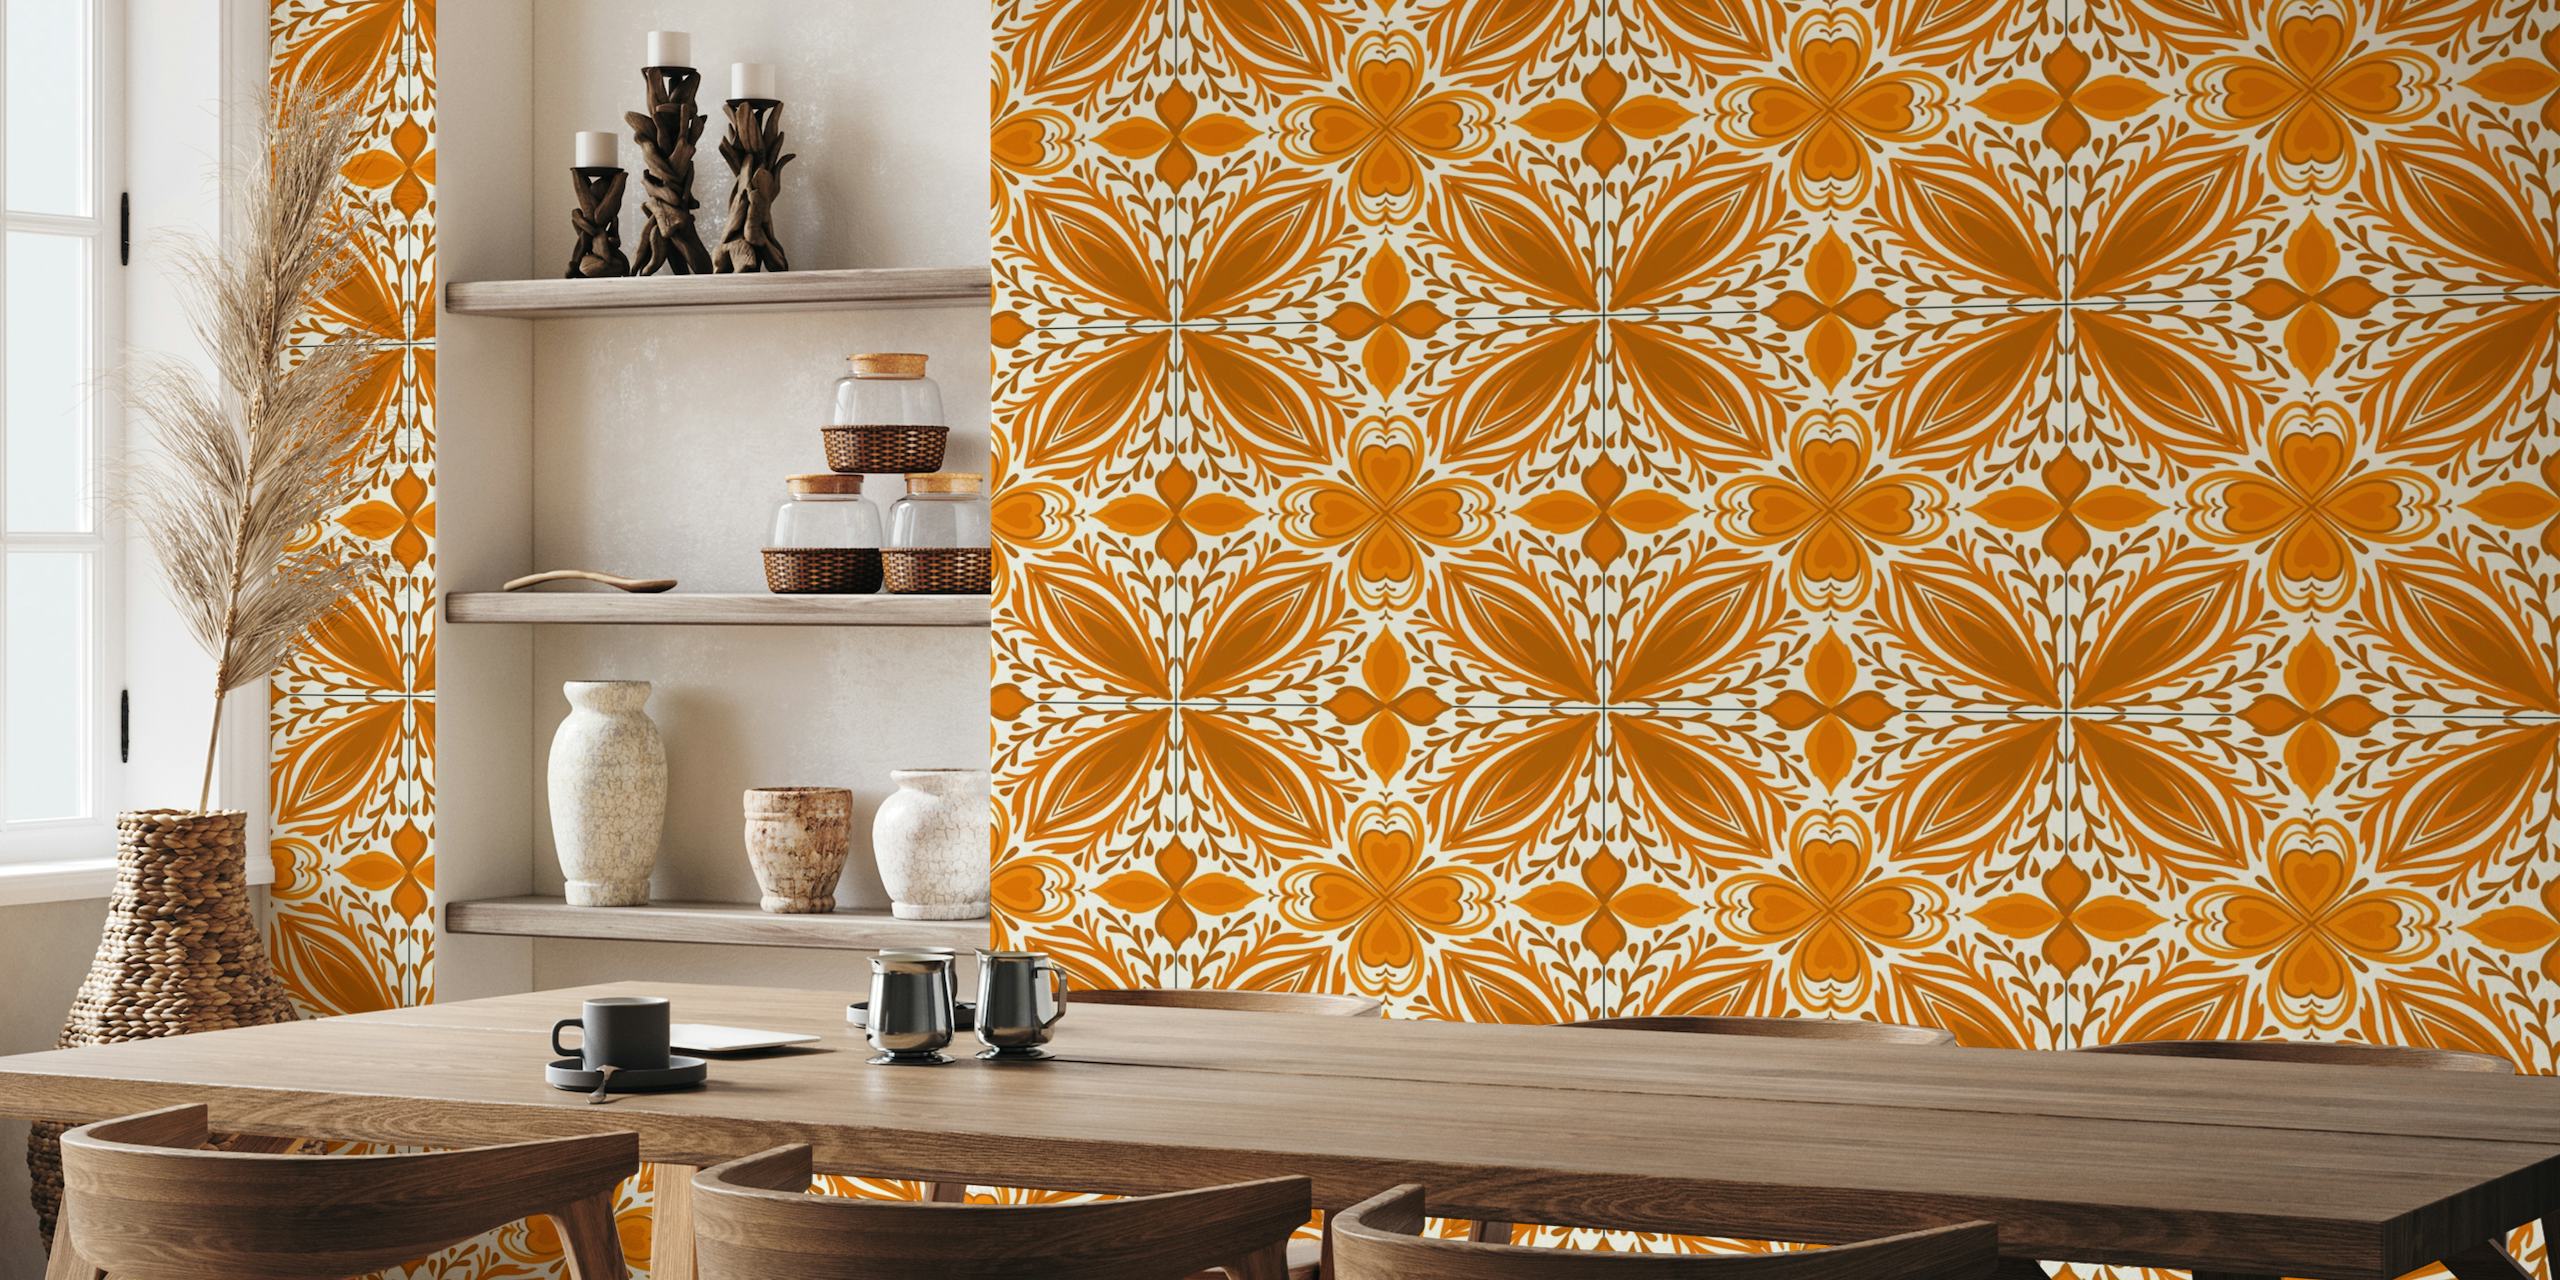 Ornate tiles, yellow and orange 4 behang